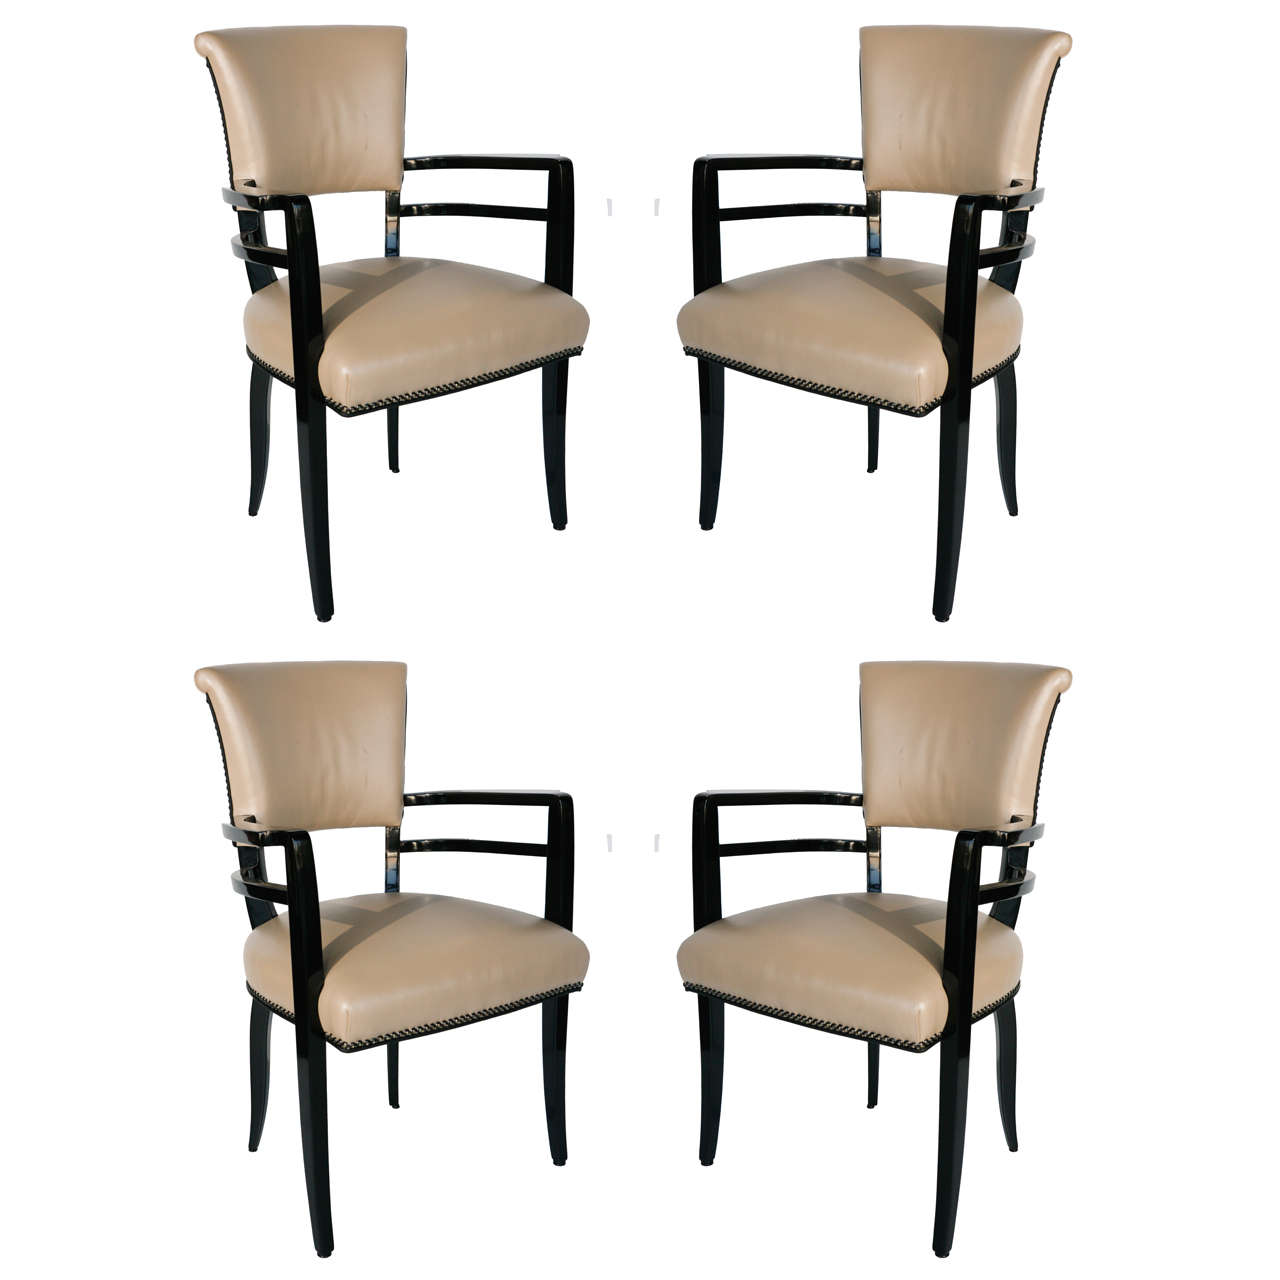 Outstanding Set of 4 Josef Hoffmann Chairs